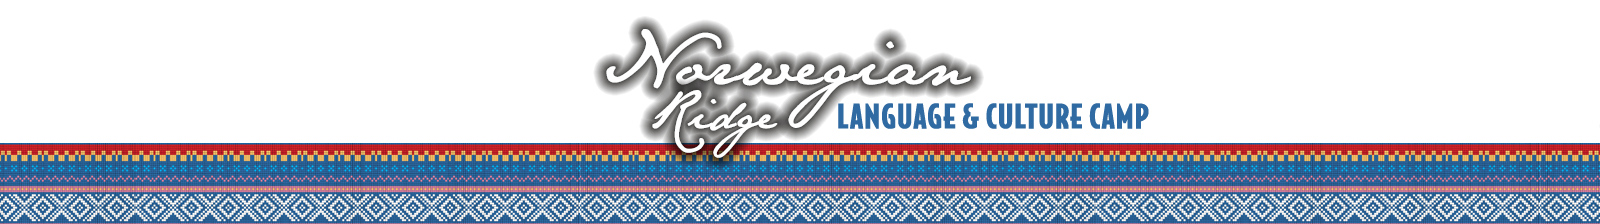 Norwegian Ridge Language Camp Graphic